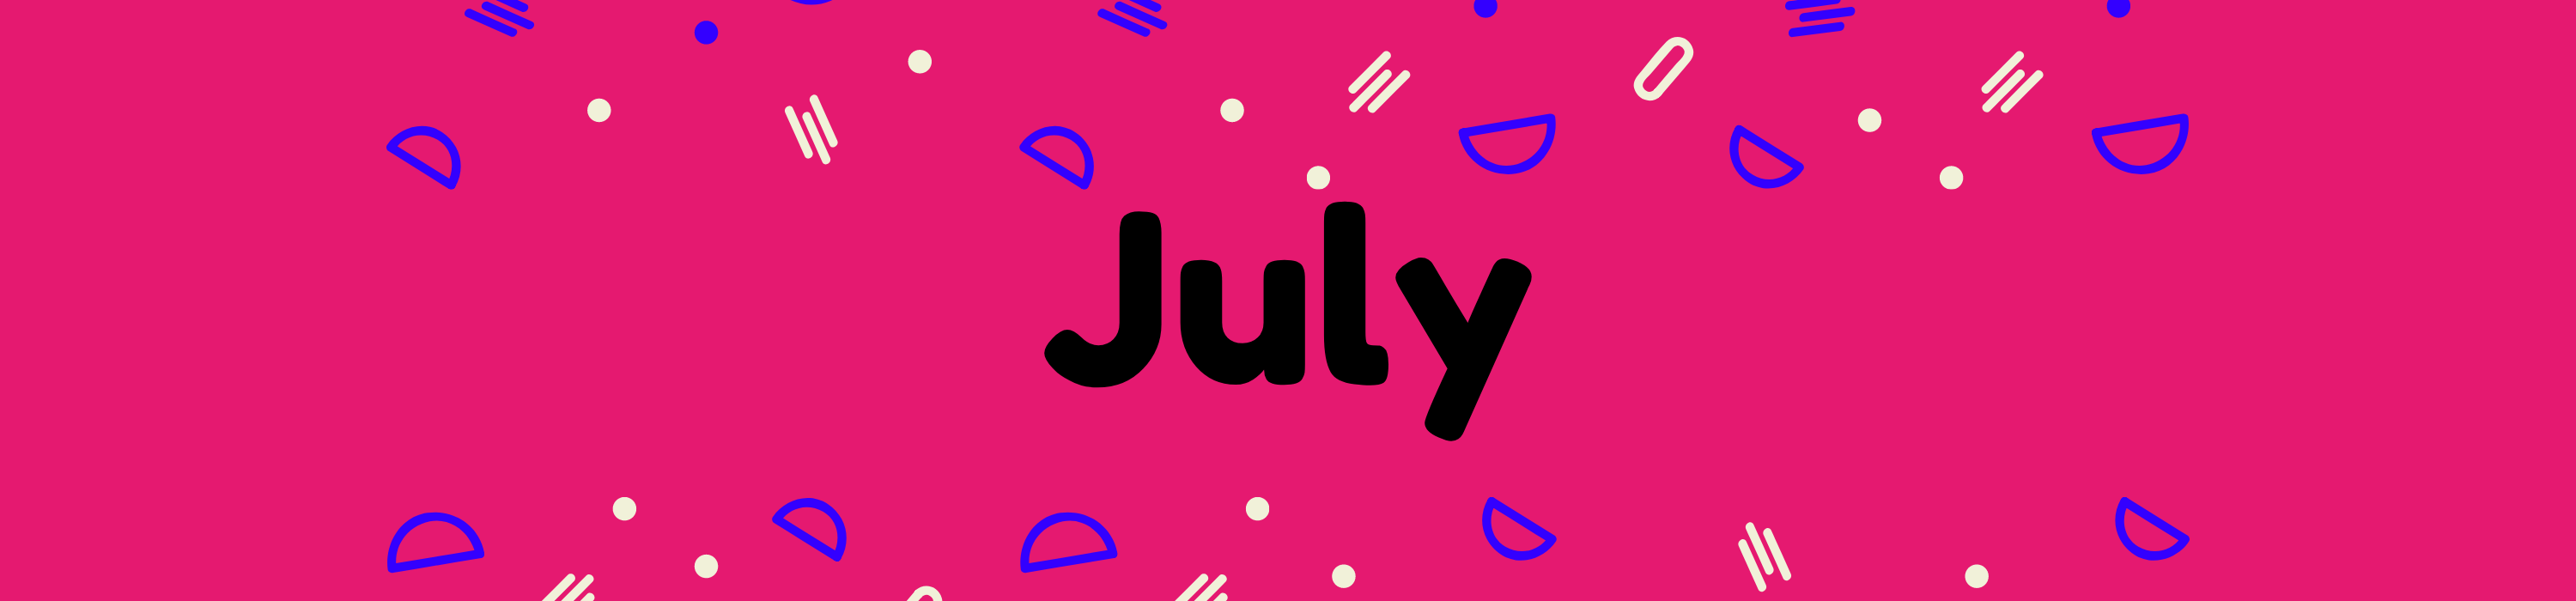 July-banner